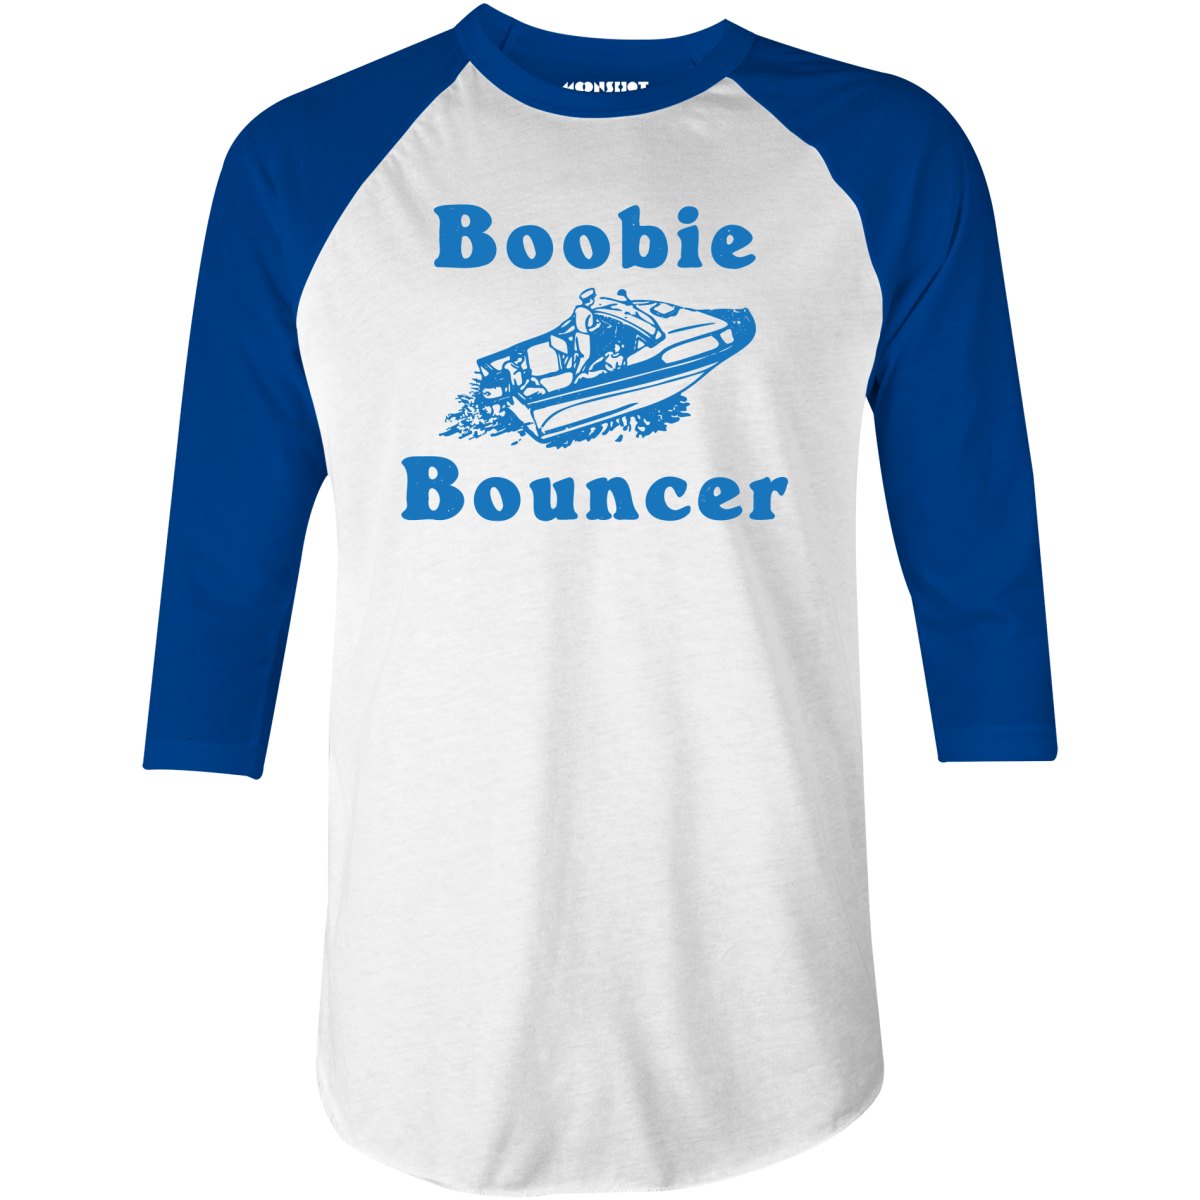 Boobie Bouncer - 3/4 Sleeve Raglan T-Shirt